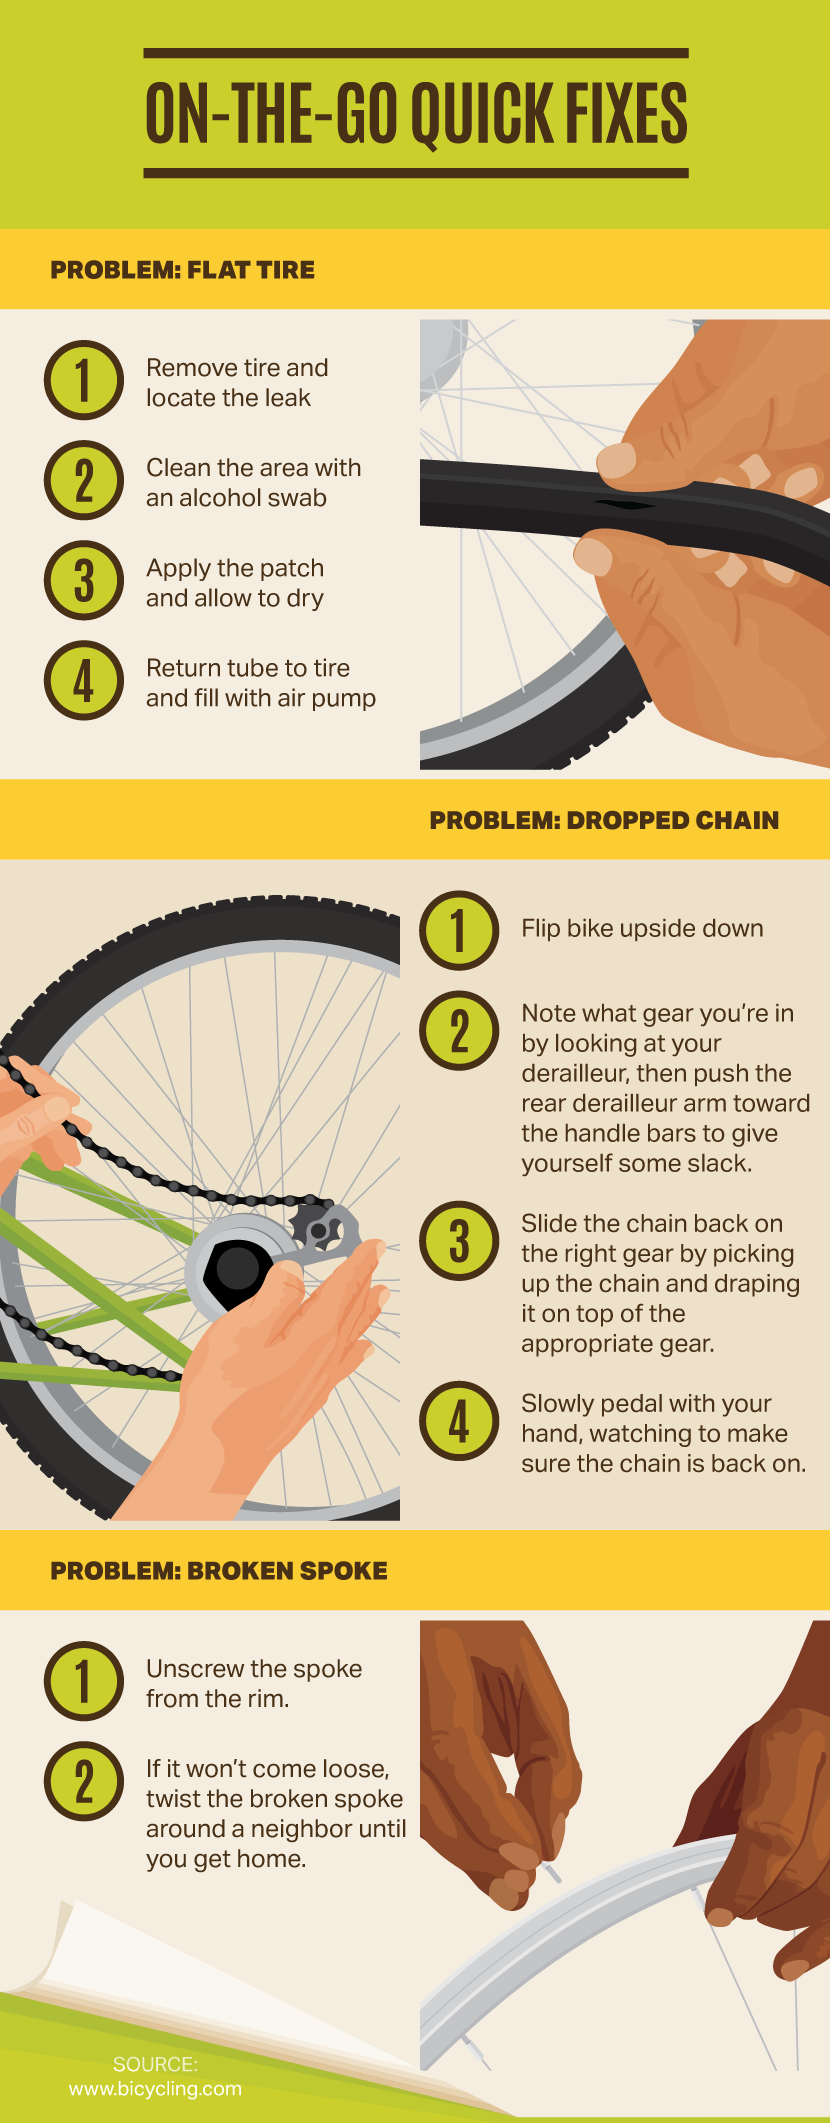 how to fix a loose bike chain